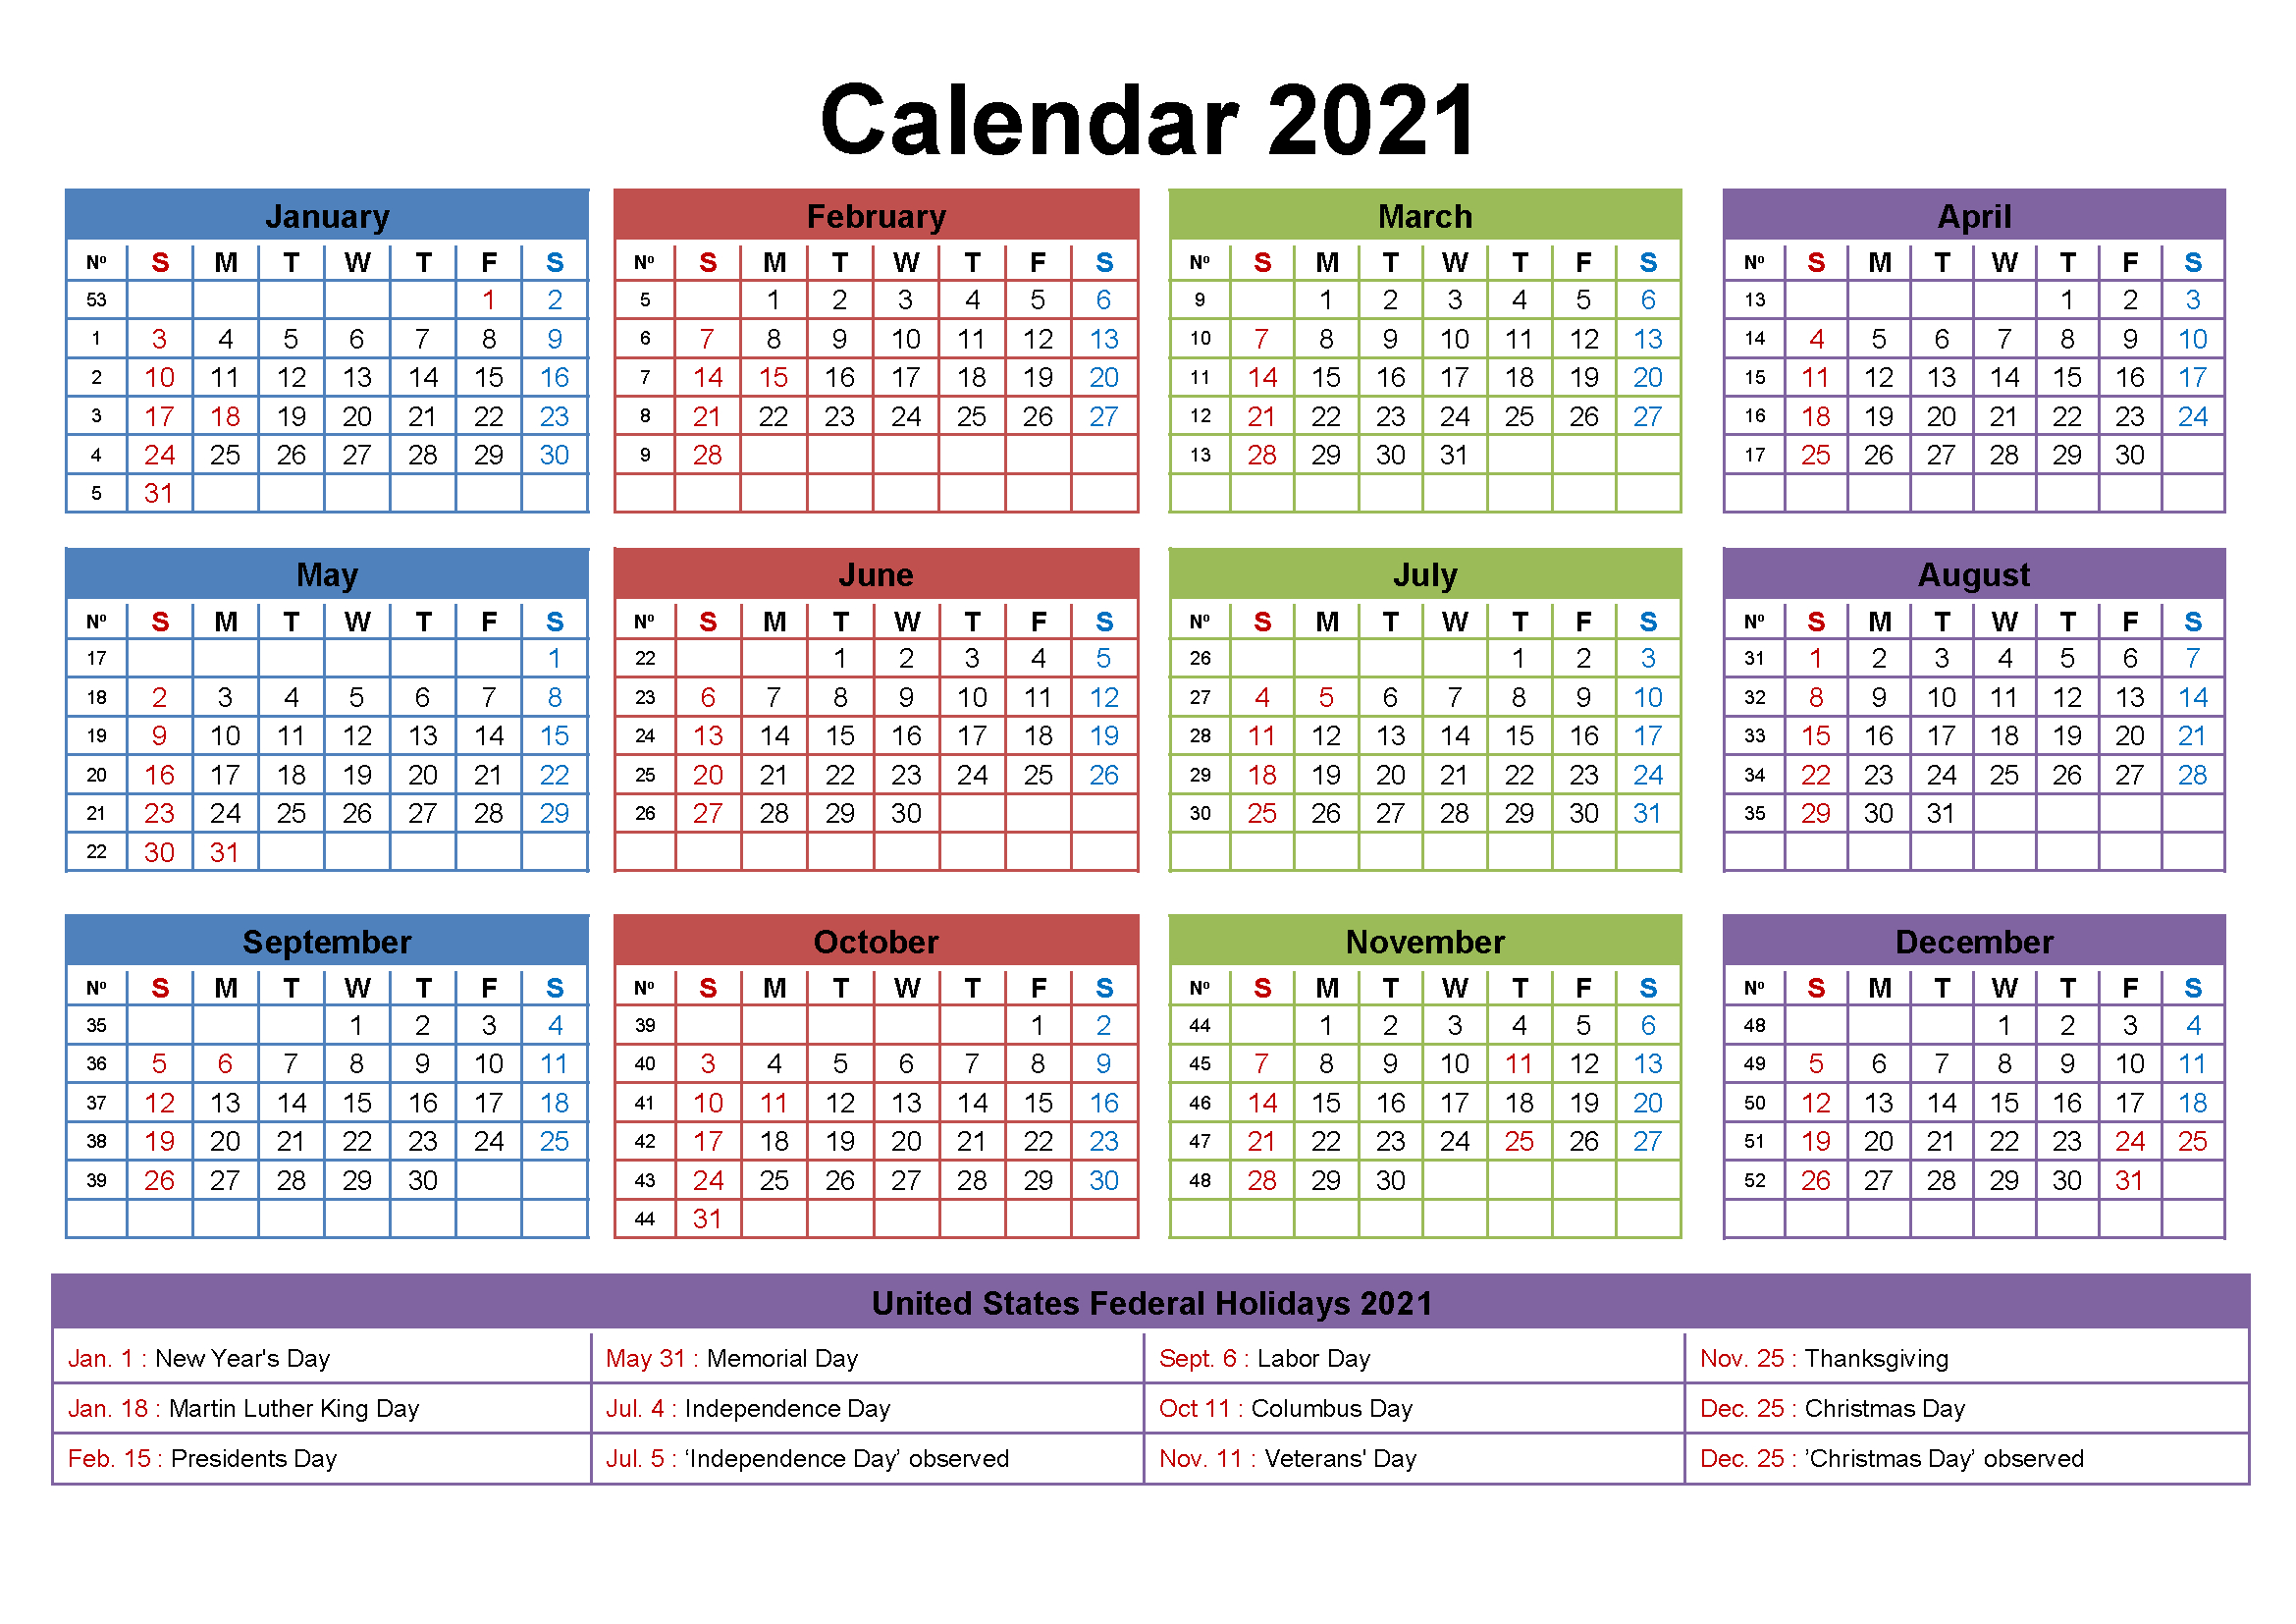 Free Editable 2021 Calendar Printable Template within Calendar 2021 With Holidays